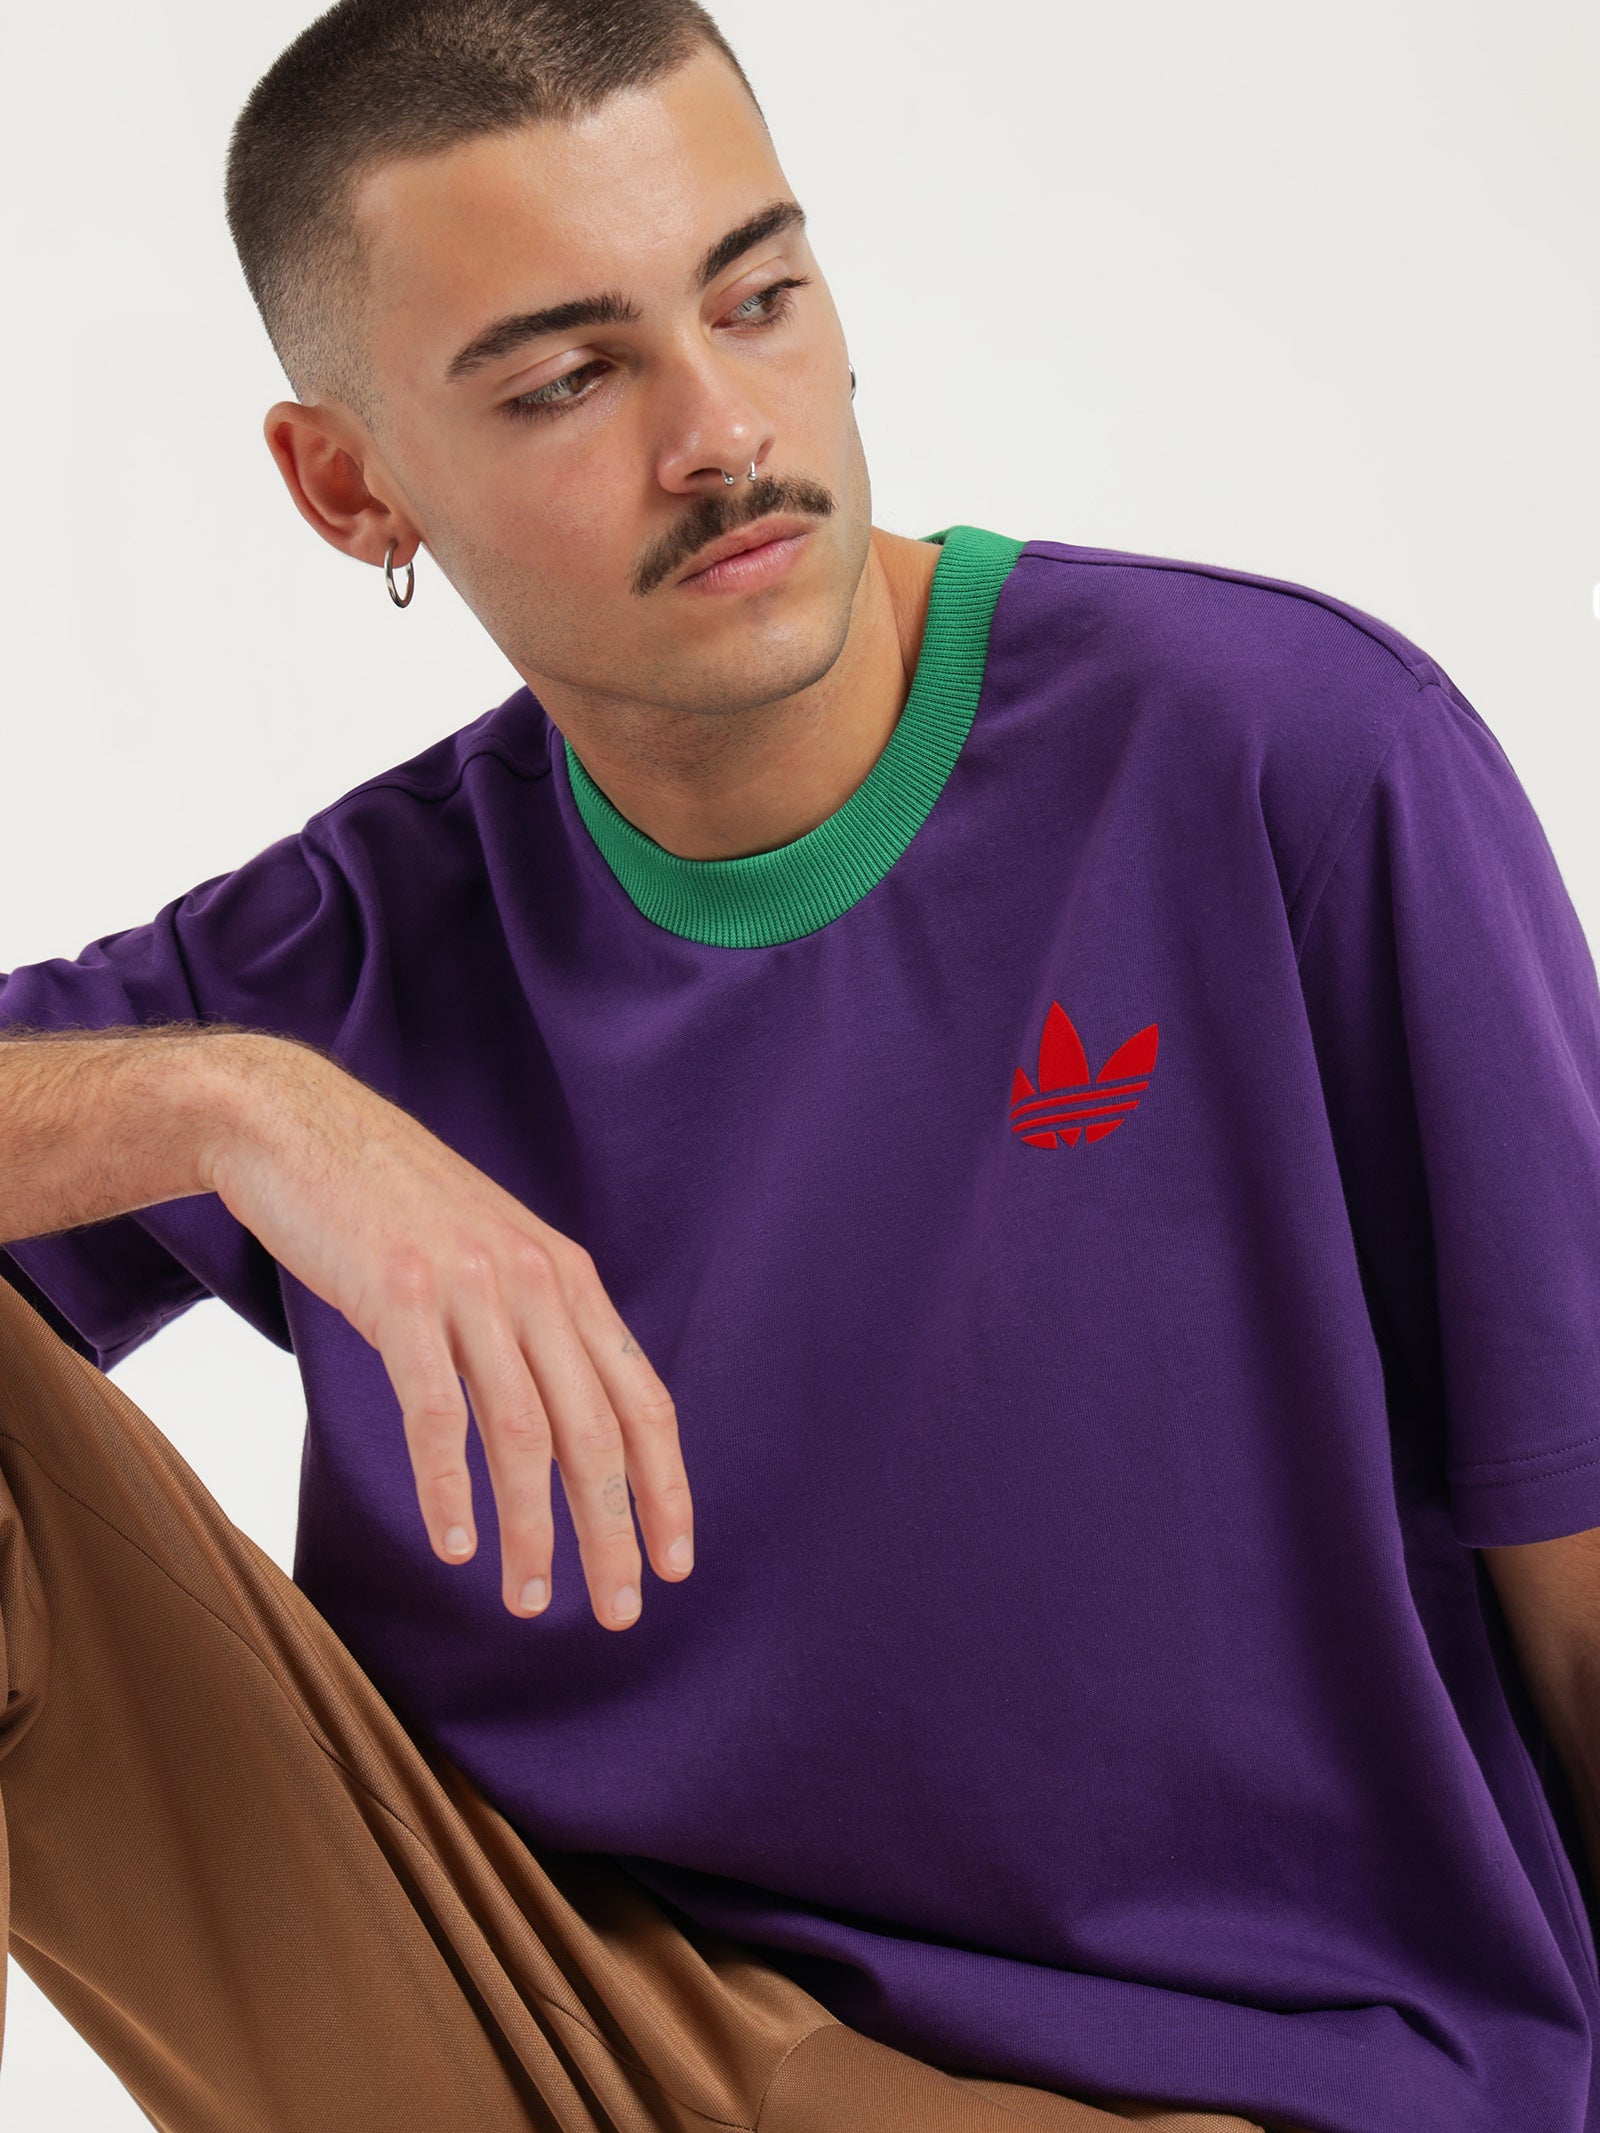 ADICOLOR 70s Heritage Now Large Trefoil T-Shirt in Purple